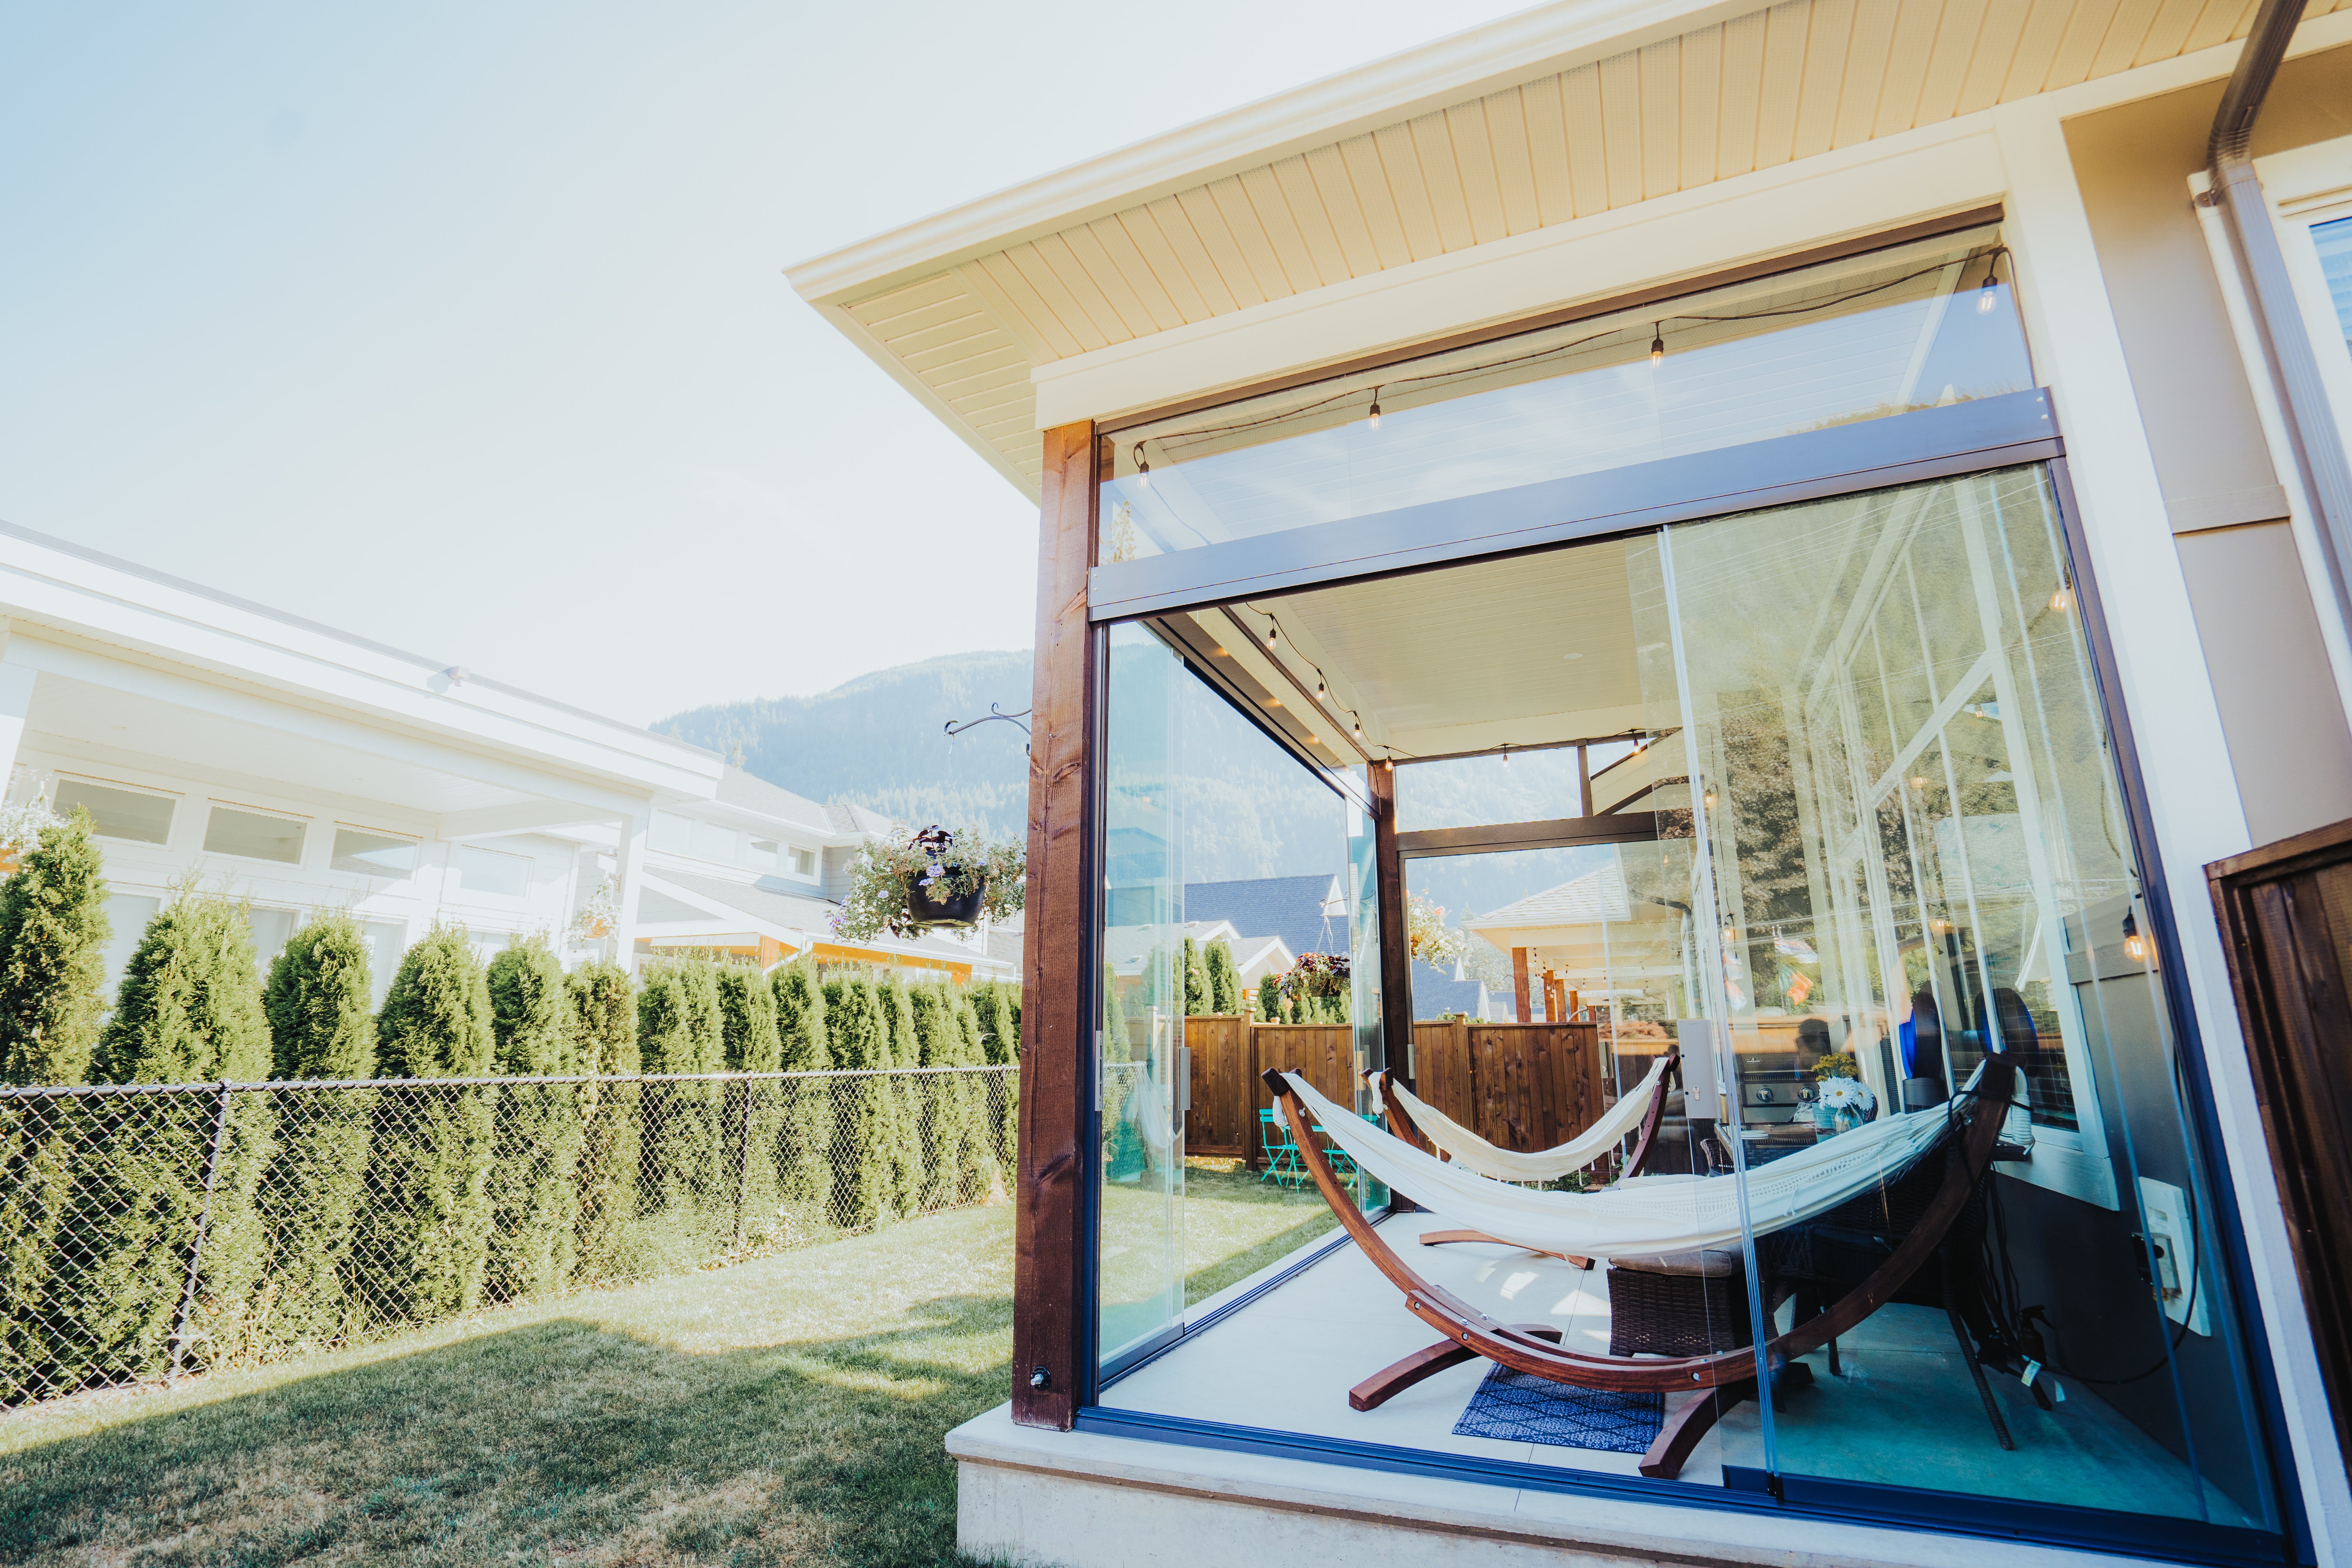 Backyard sunroom with sliding glass wall